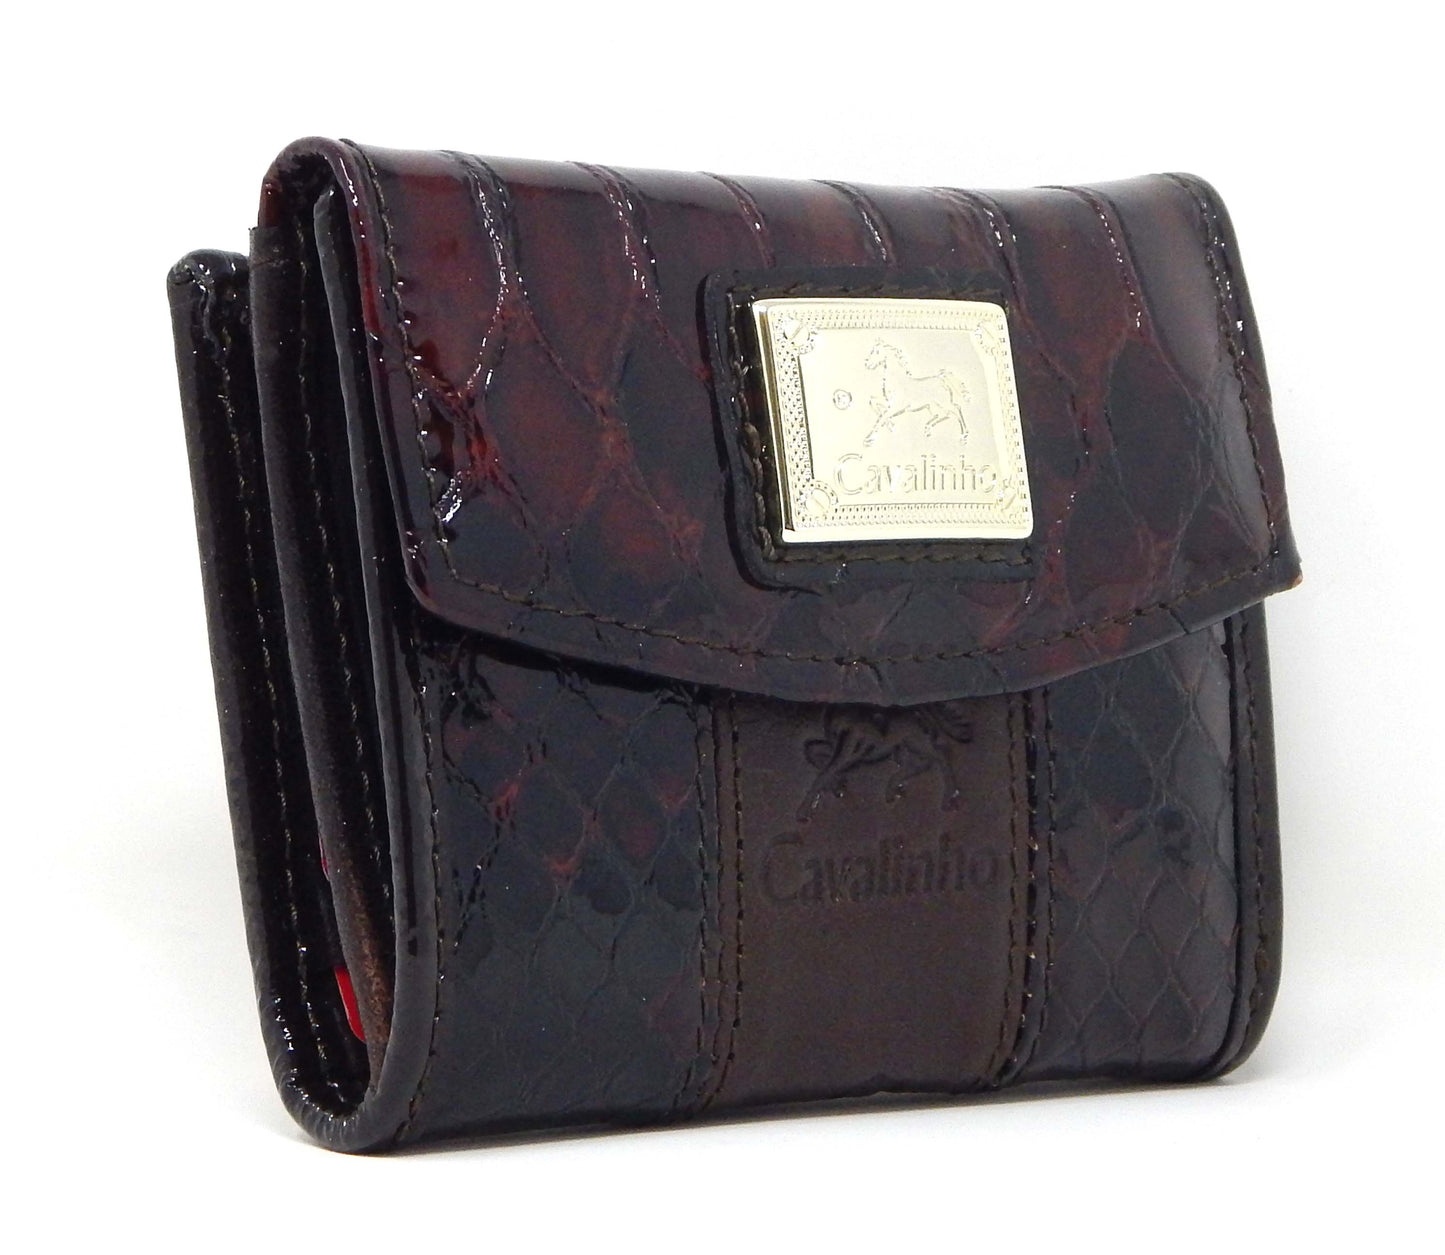 Cavalinho Honor Mini Leather Wallet - Brown - 28190530.02.99_2